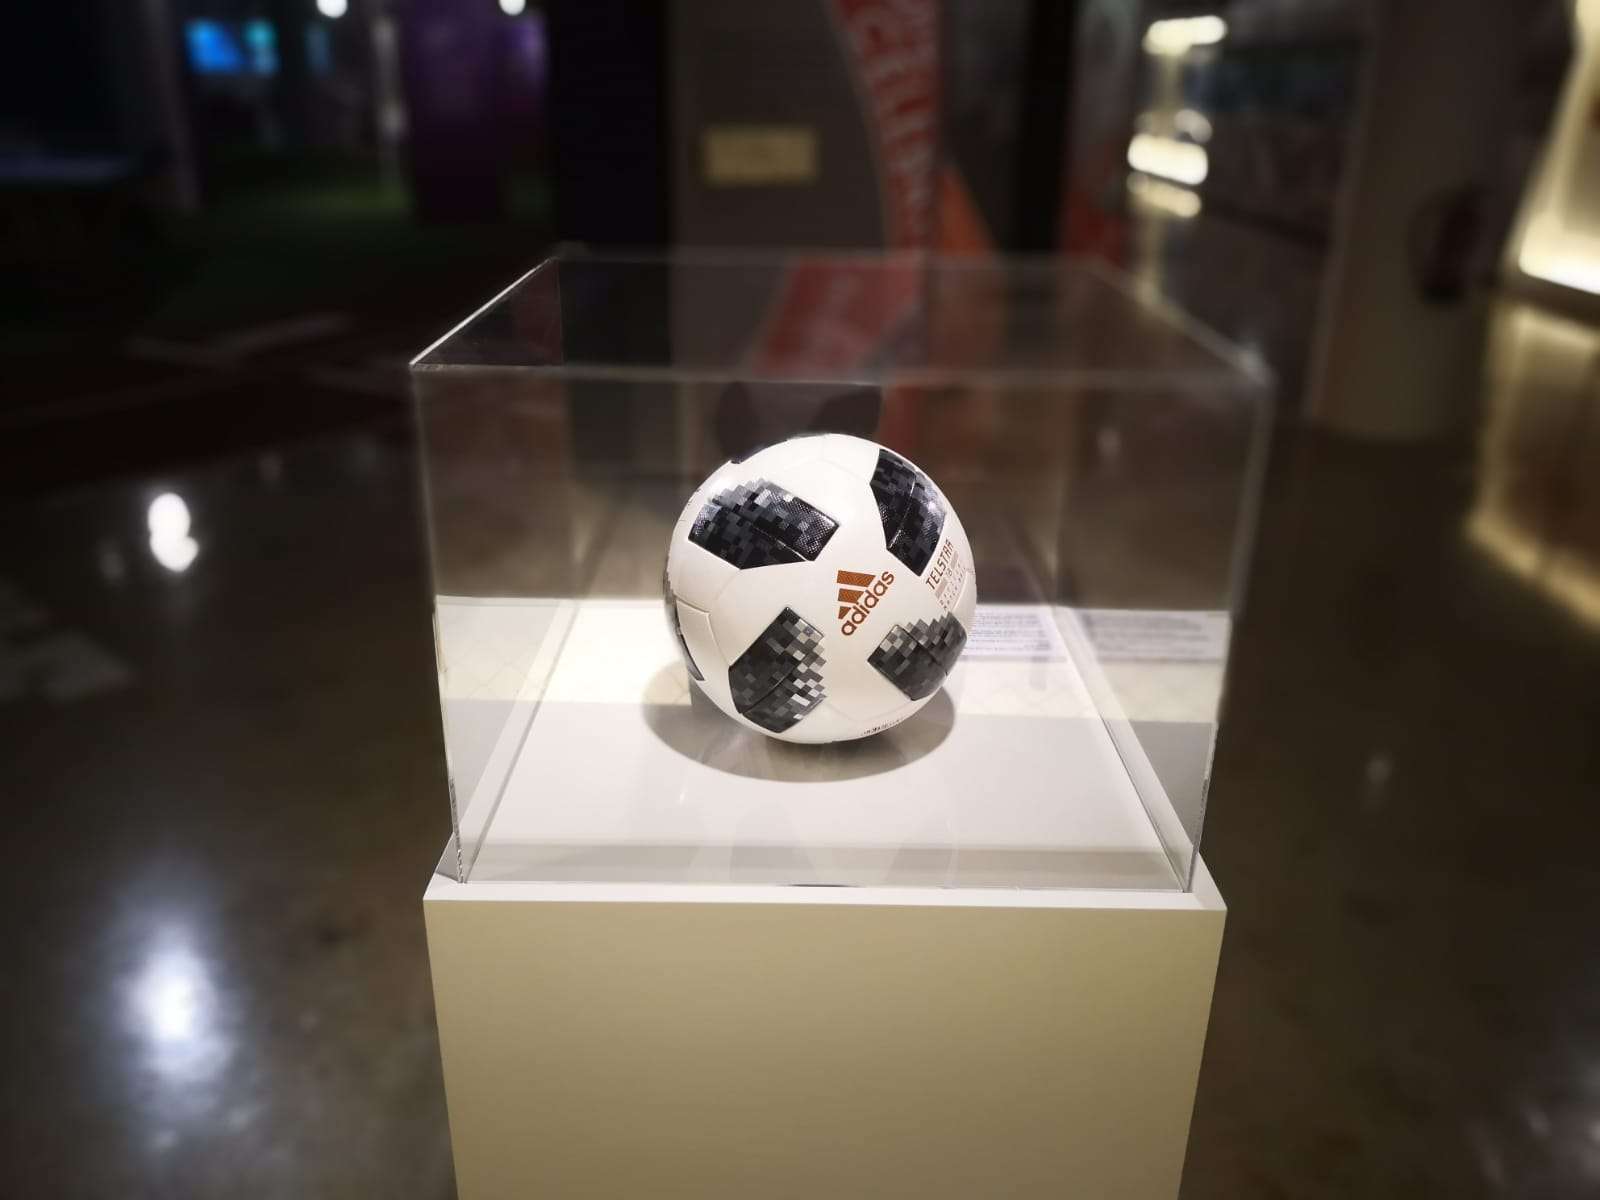 World Cup ball